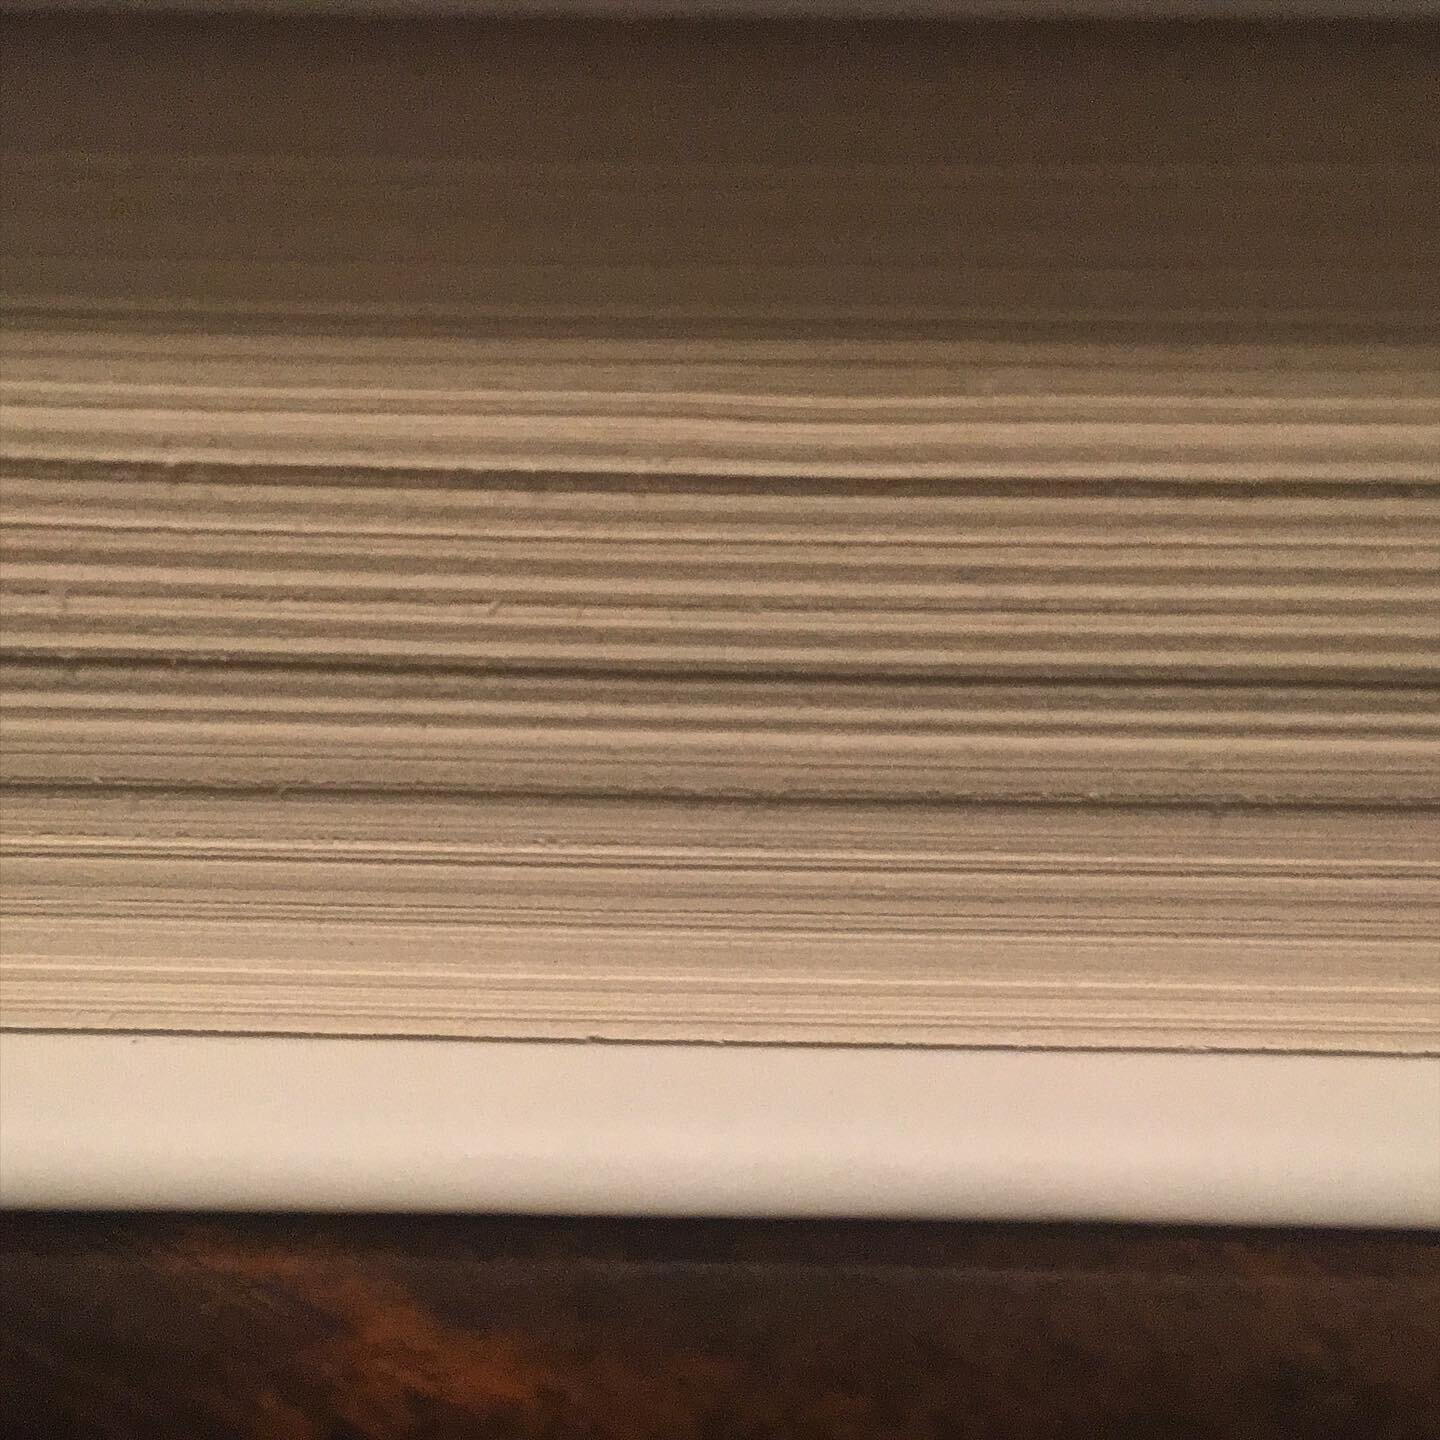 Book.  #closeup #texture #book #reading #paper #brooklyn #rutgerbregman #artistsoninstagram